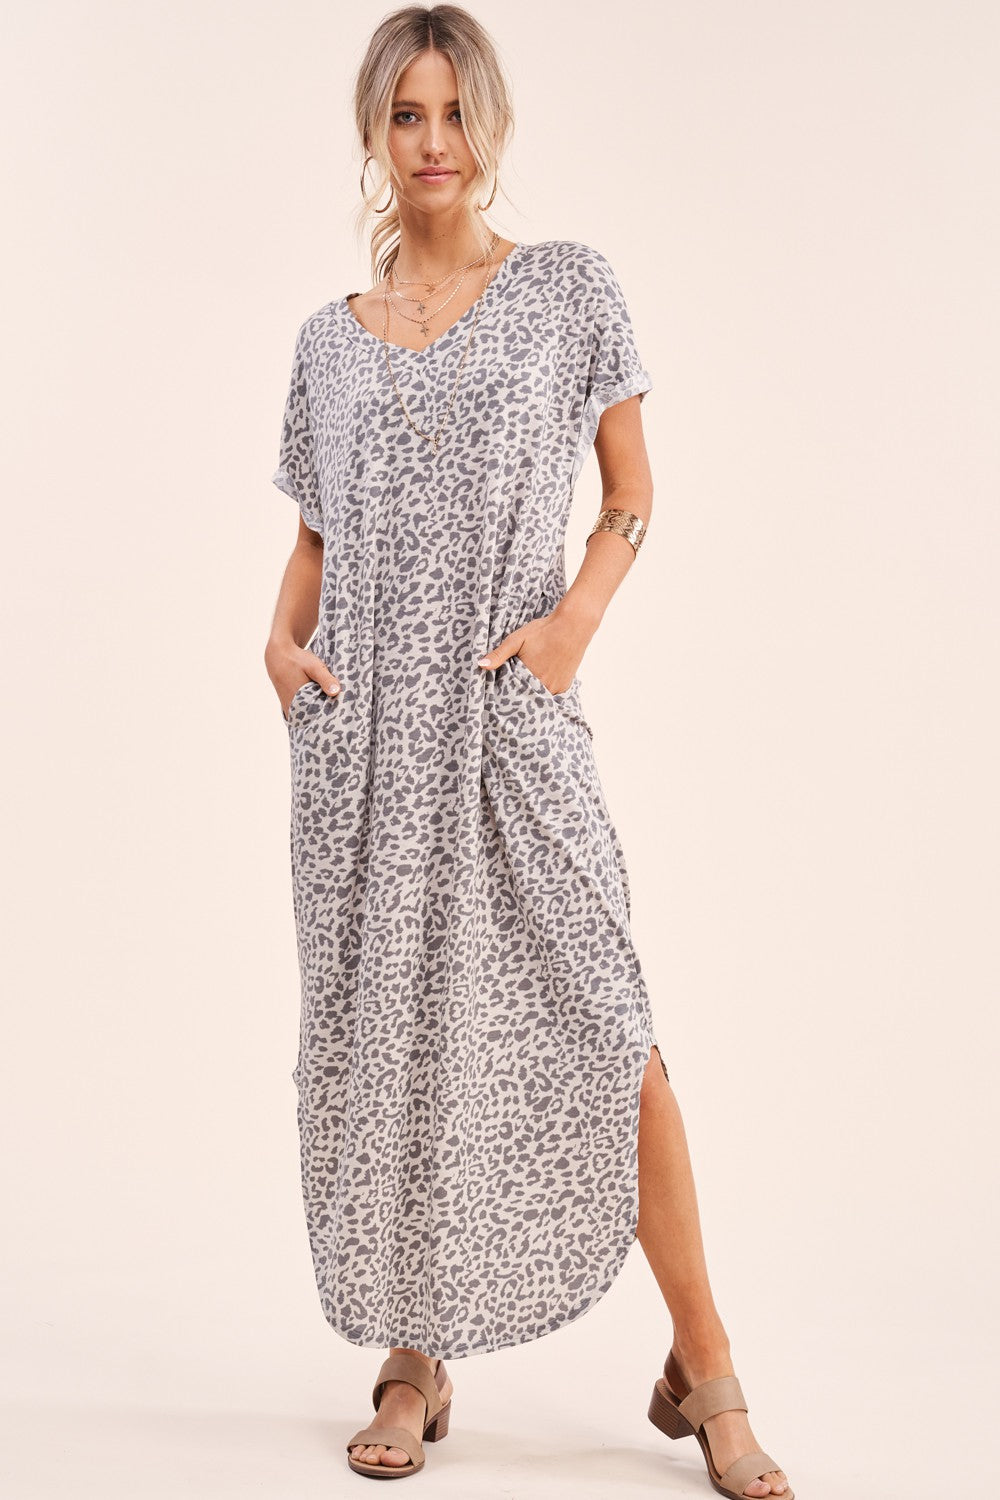 Grey Leopard Soft Summer Maxi Dress